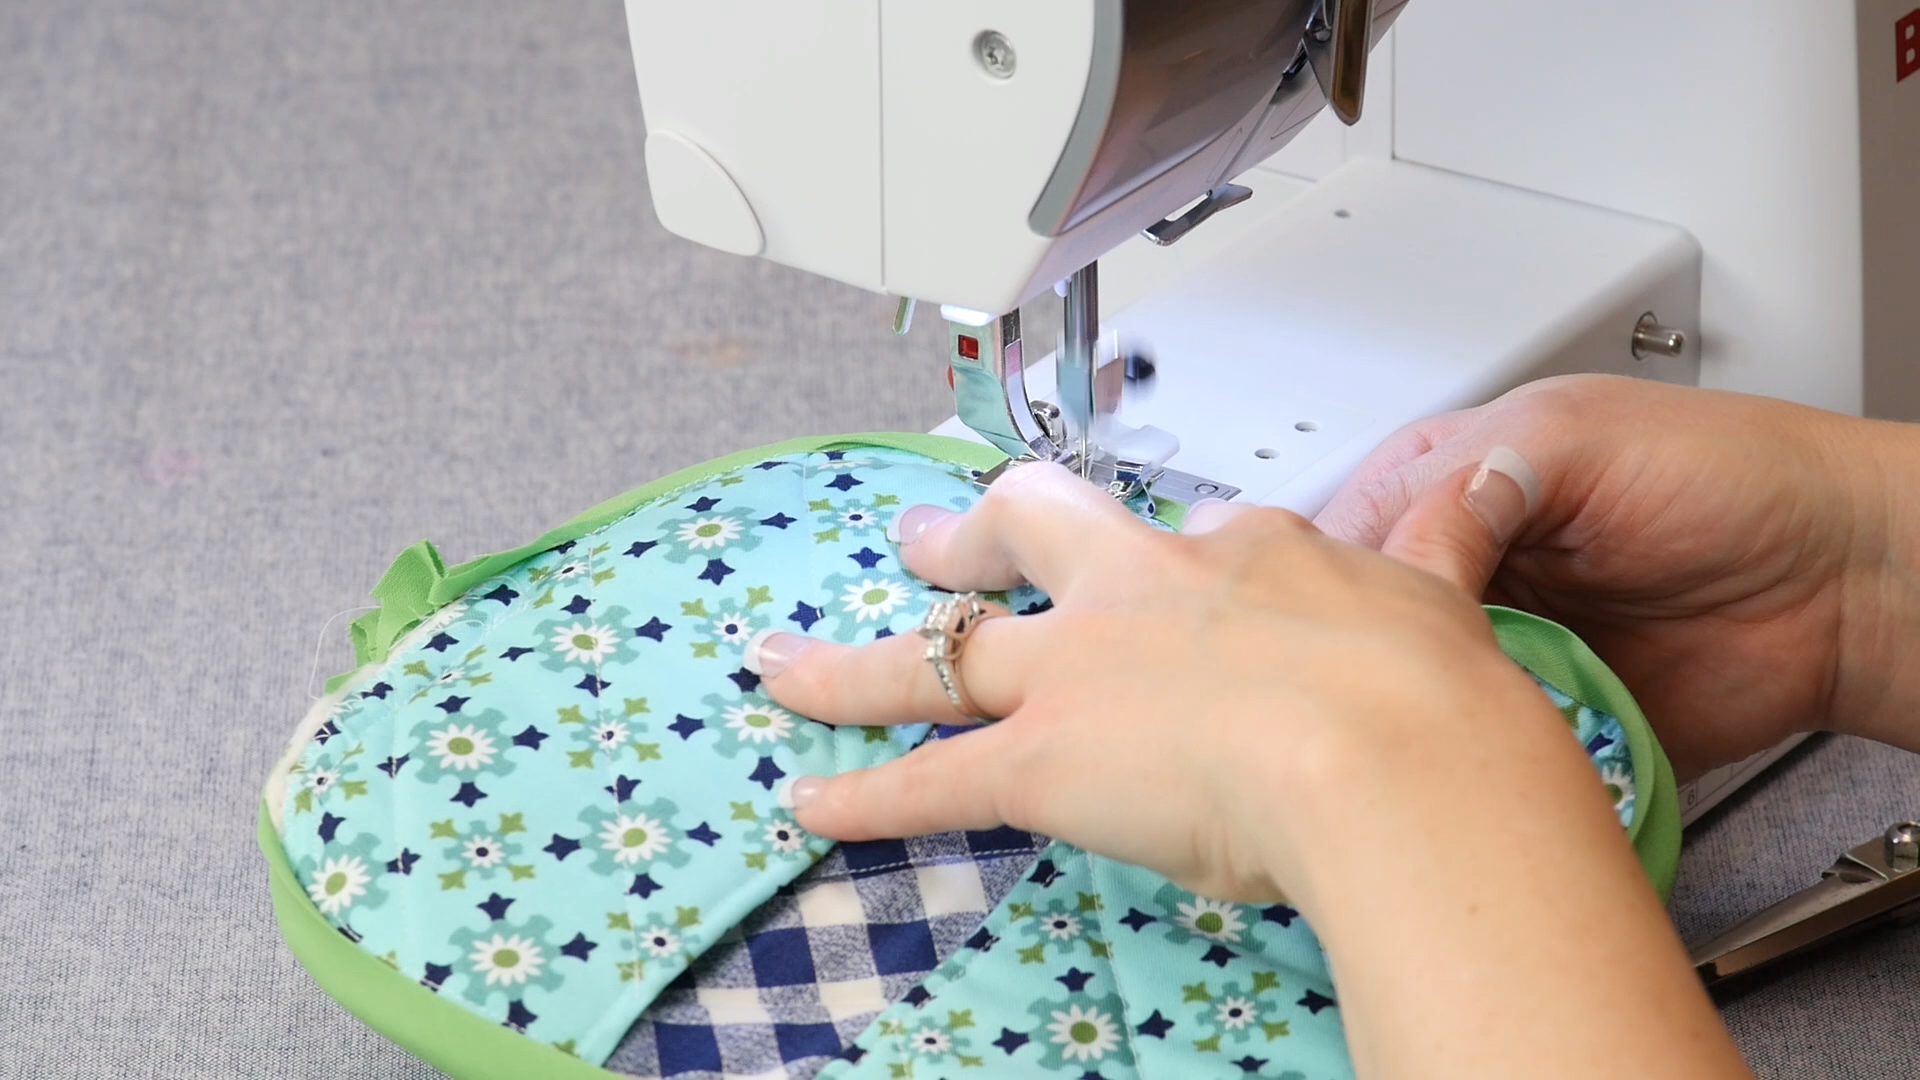 22 simple fabric crafts Videos ideas